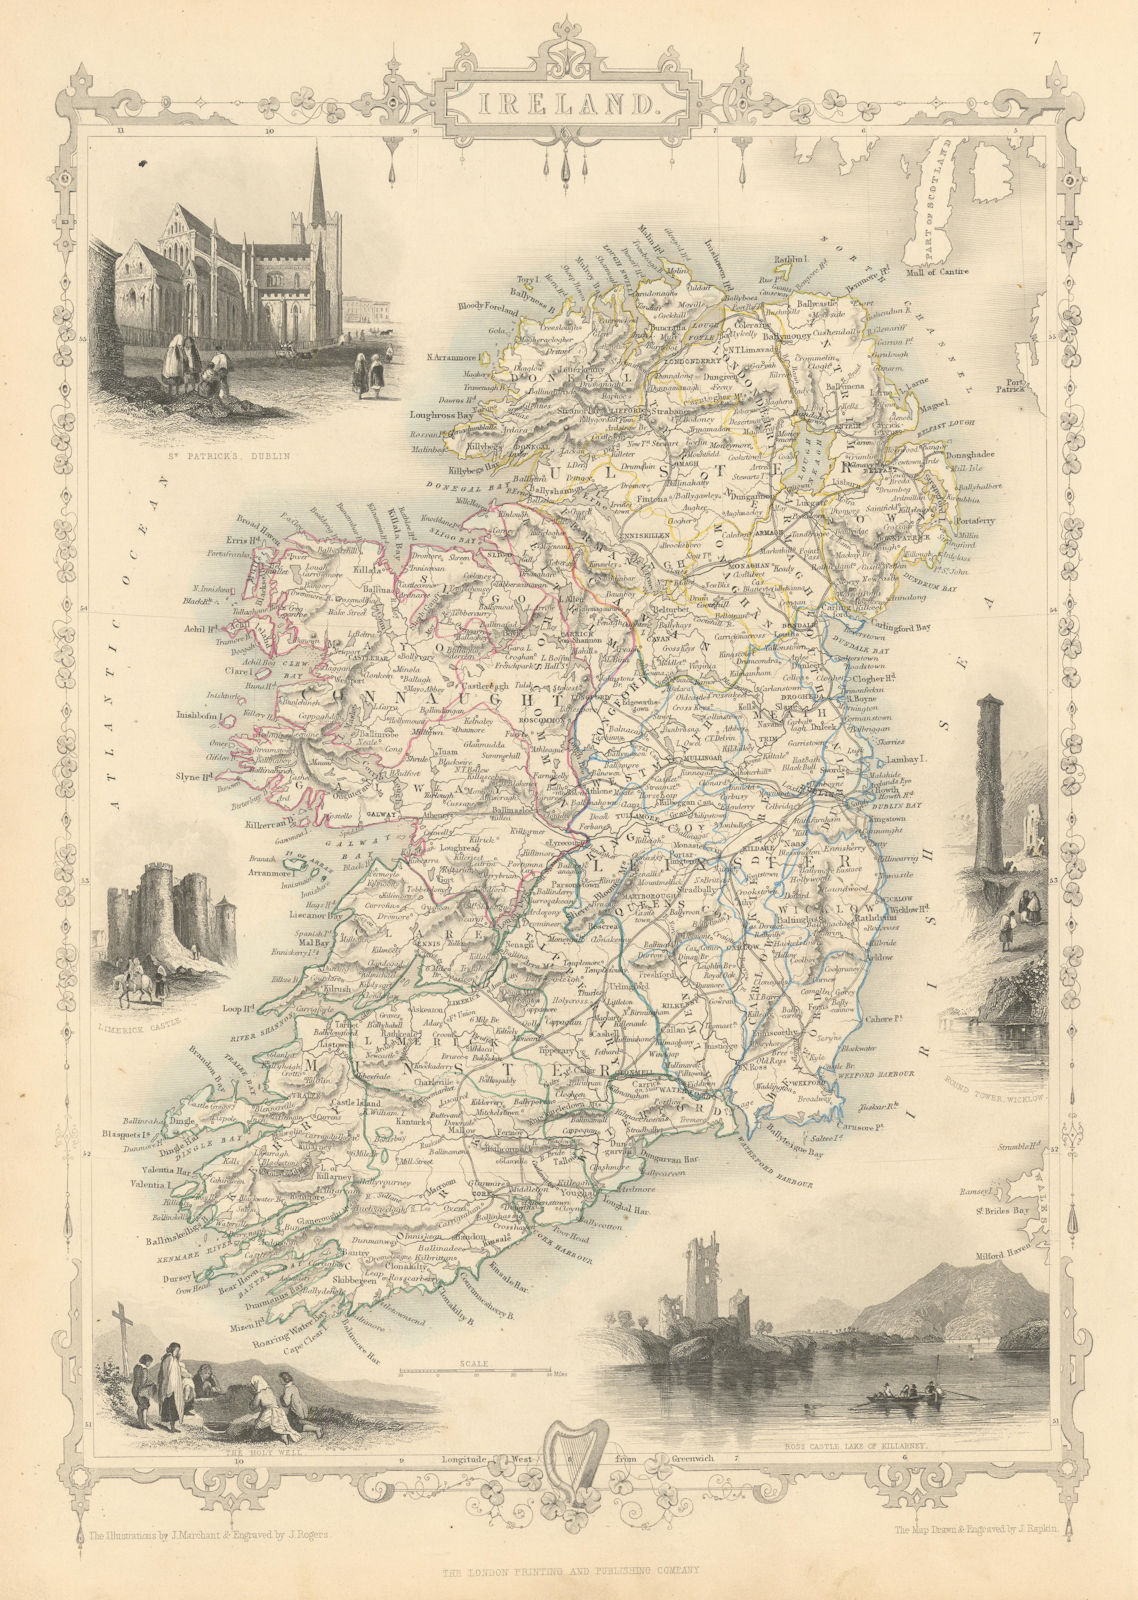 IRELAND. St Patrick's Dublin Killarney round tower views. RAPKIN/TALLIS 1851 map